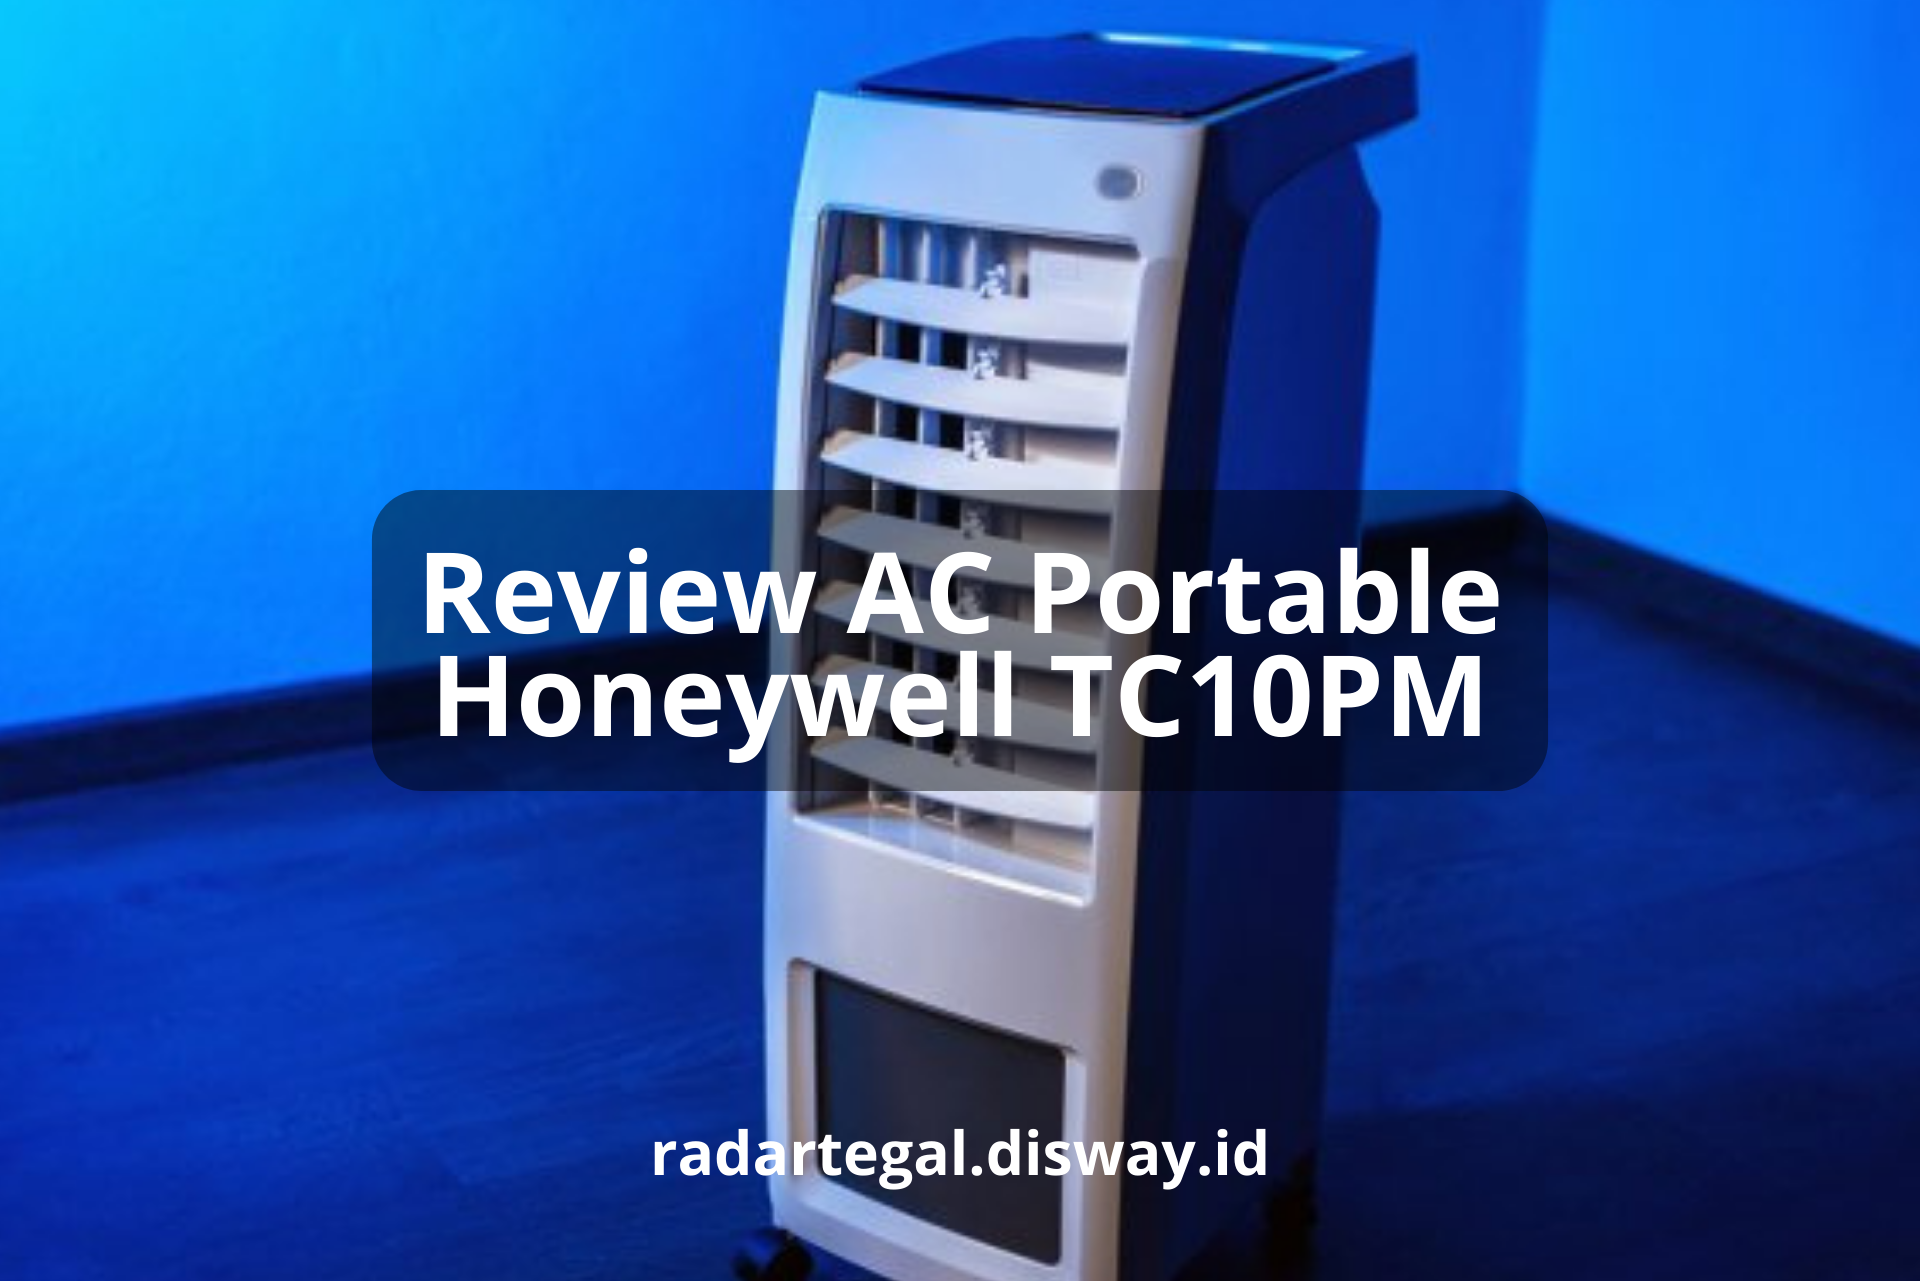 Review AC Portable Honeywell TC10PM, AC Mini yang Punya Fitur Humidification